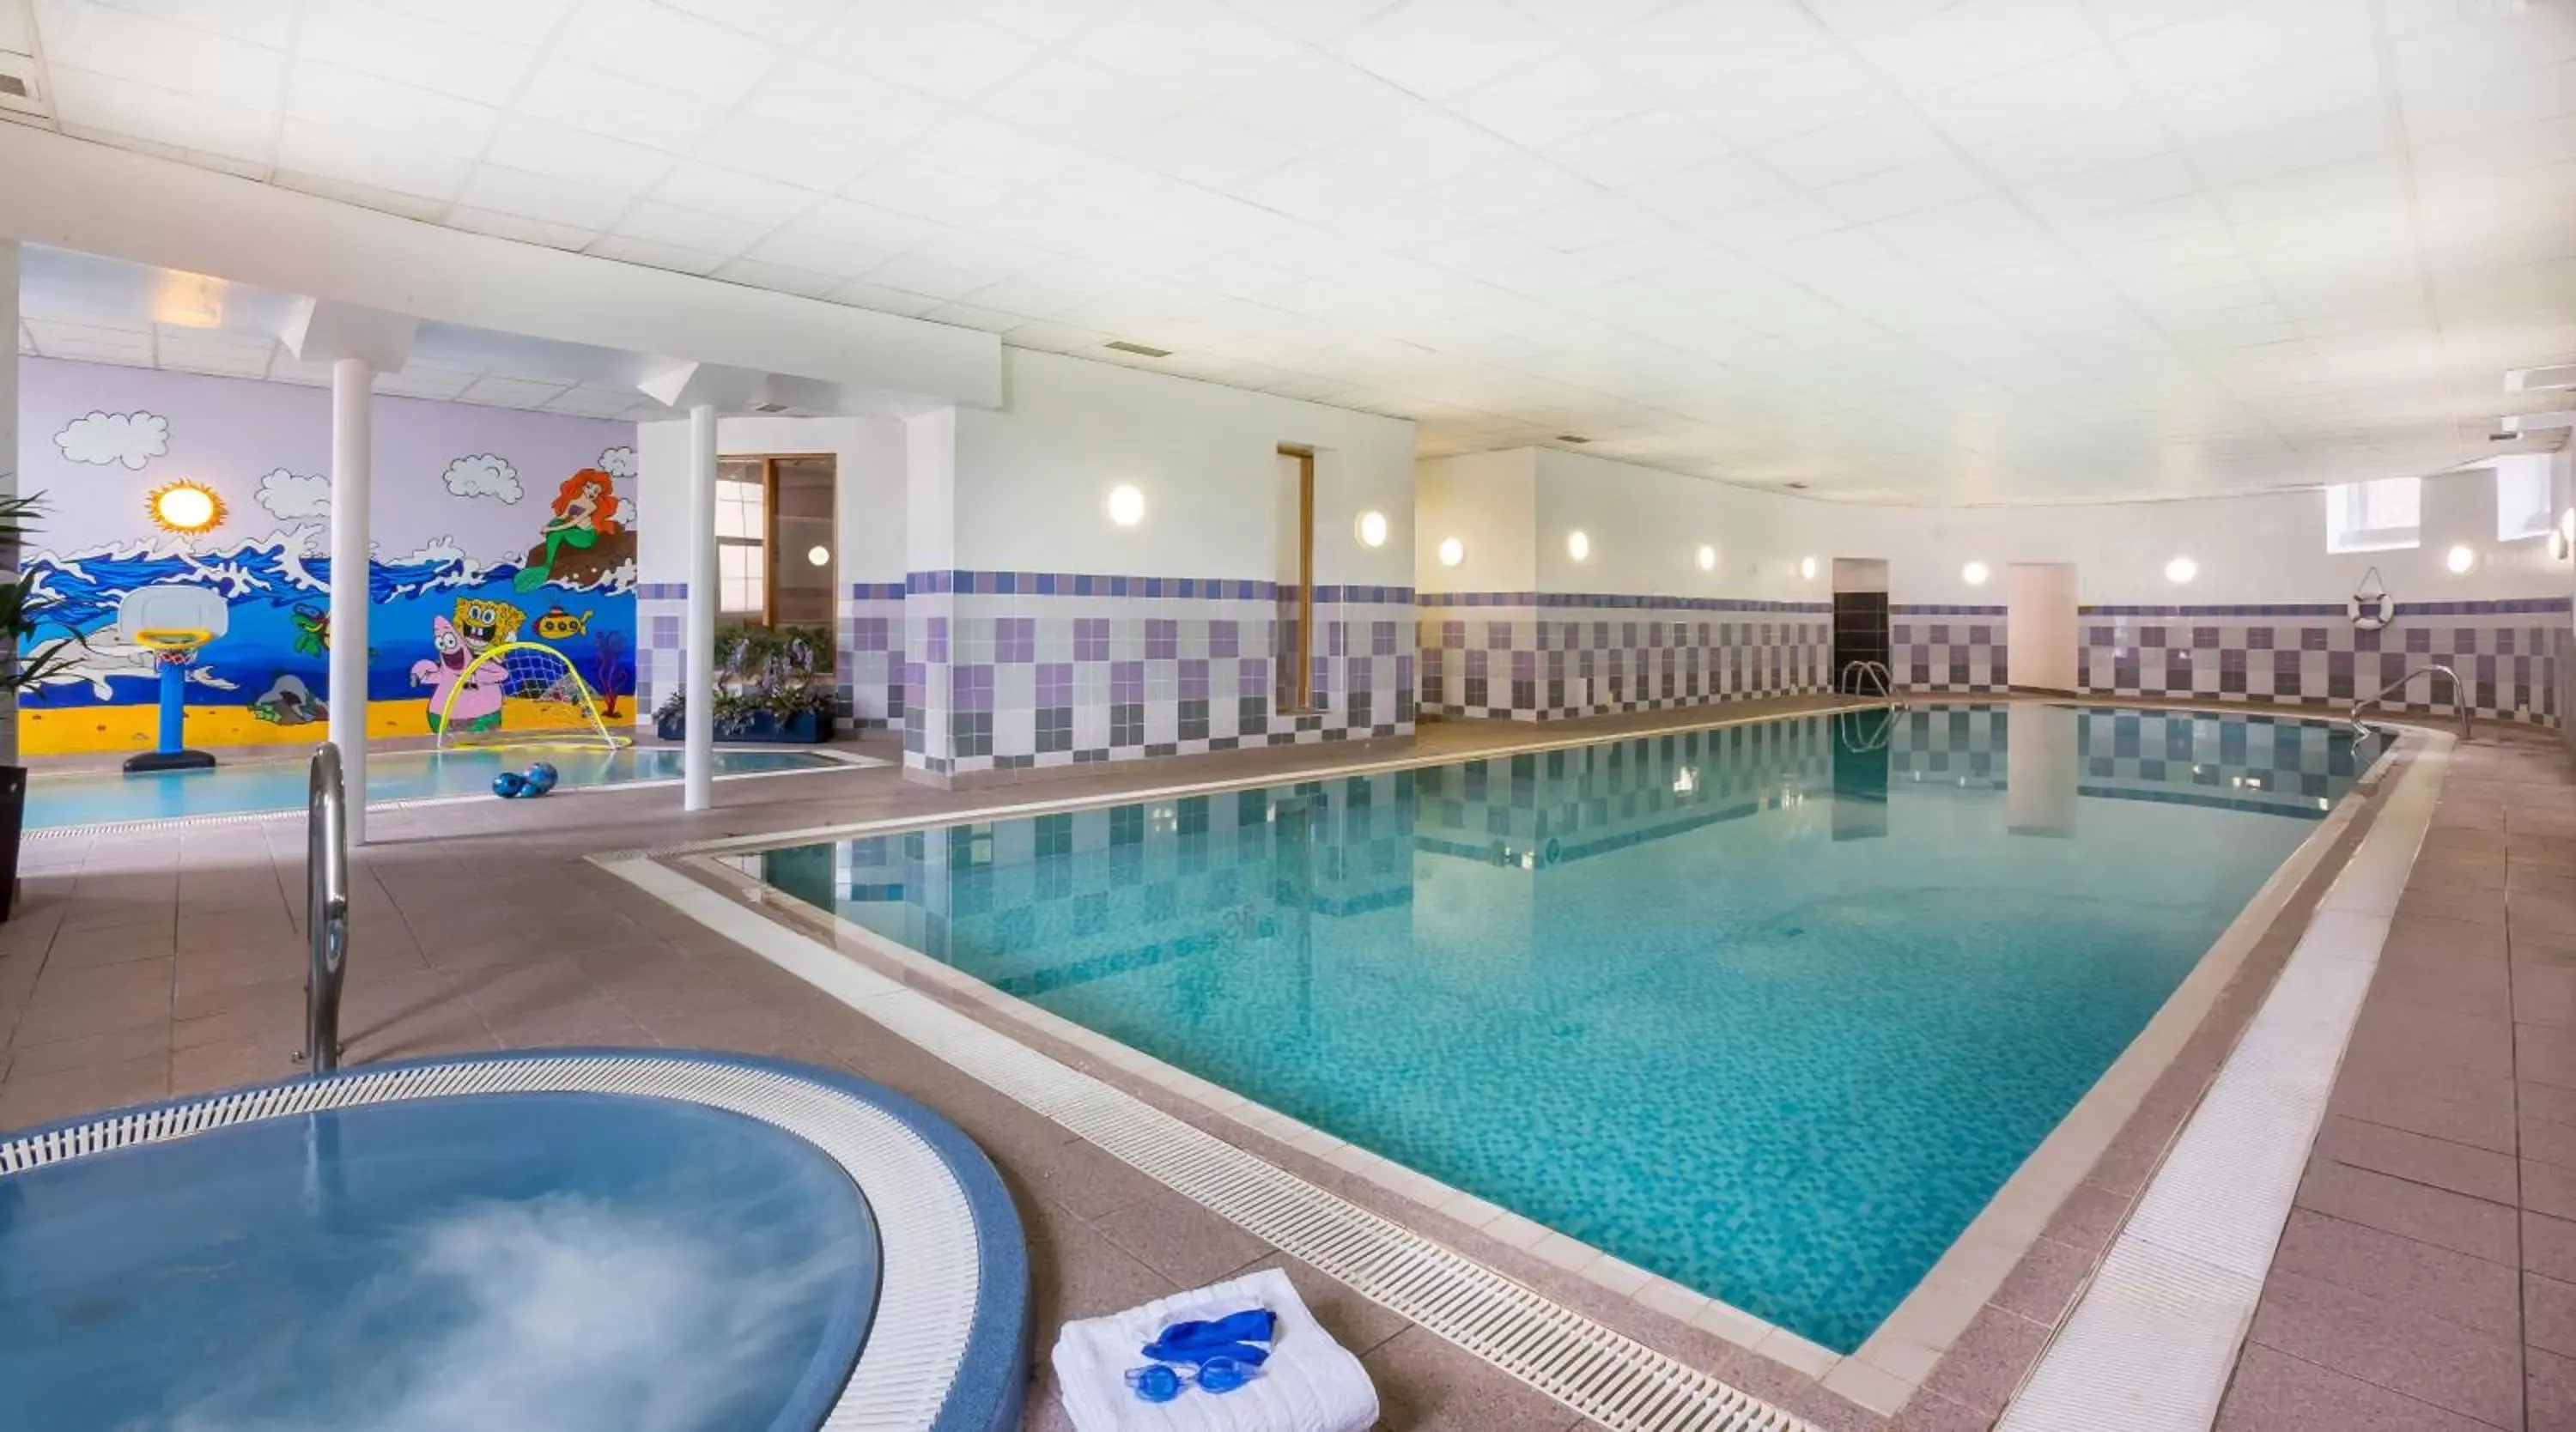 Steam room, Swimming Pool in Maldron Hotel Shandon Cork City